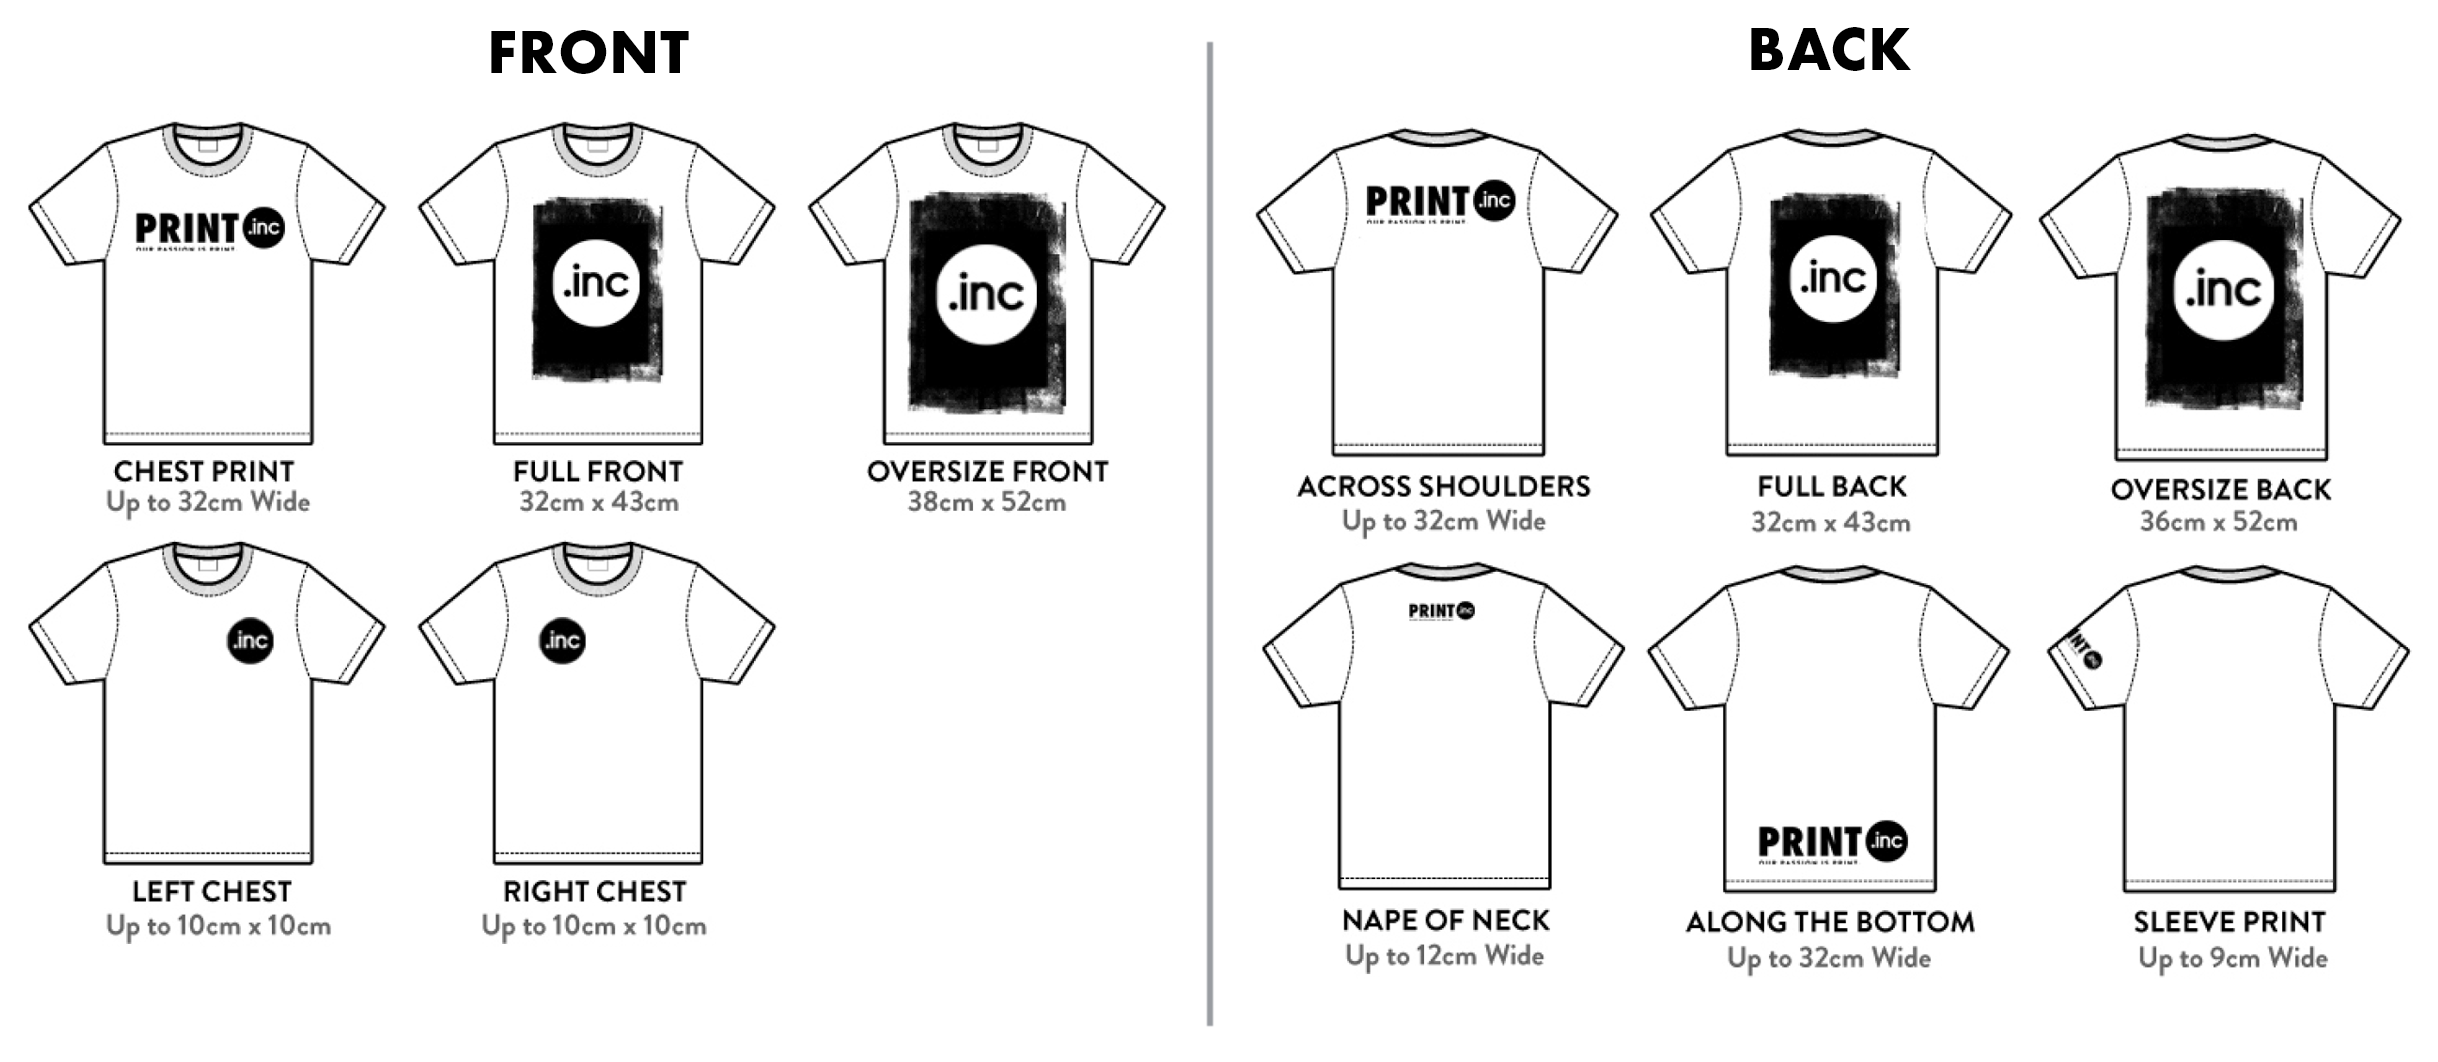 Print Inc-AS Colour Classic Pocket T-Shirts